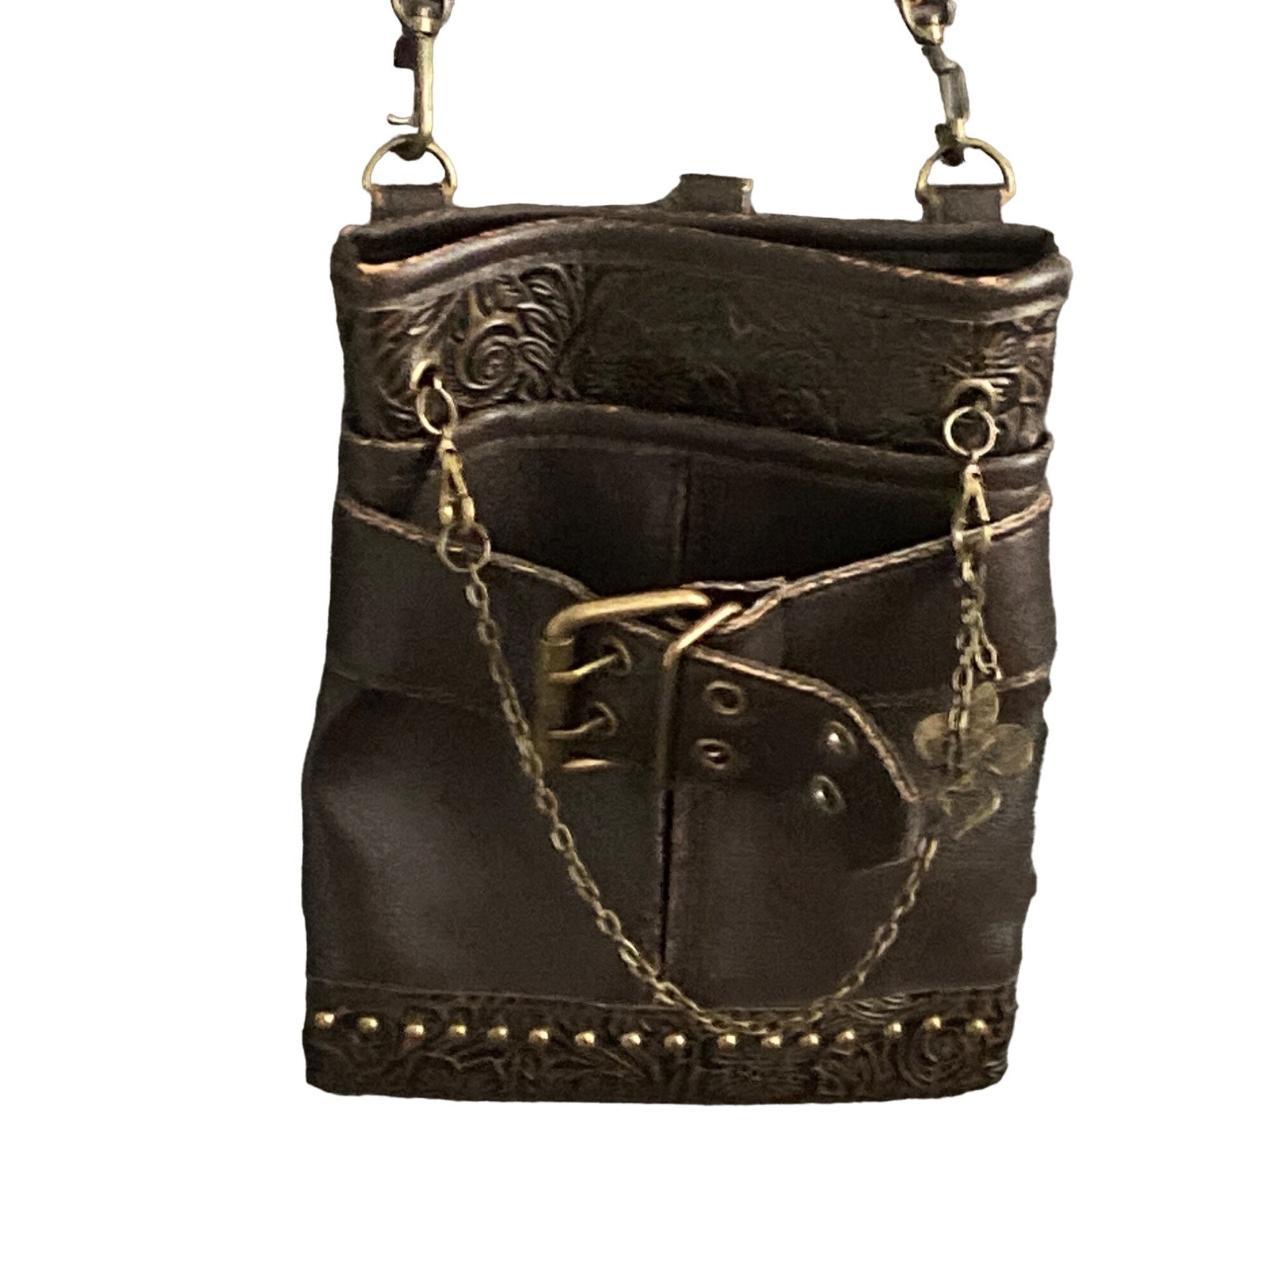 St. John's Bay REAL LEATHER Handbag/Purse (Black) | eBay